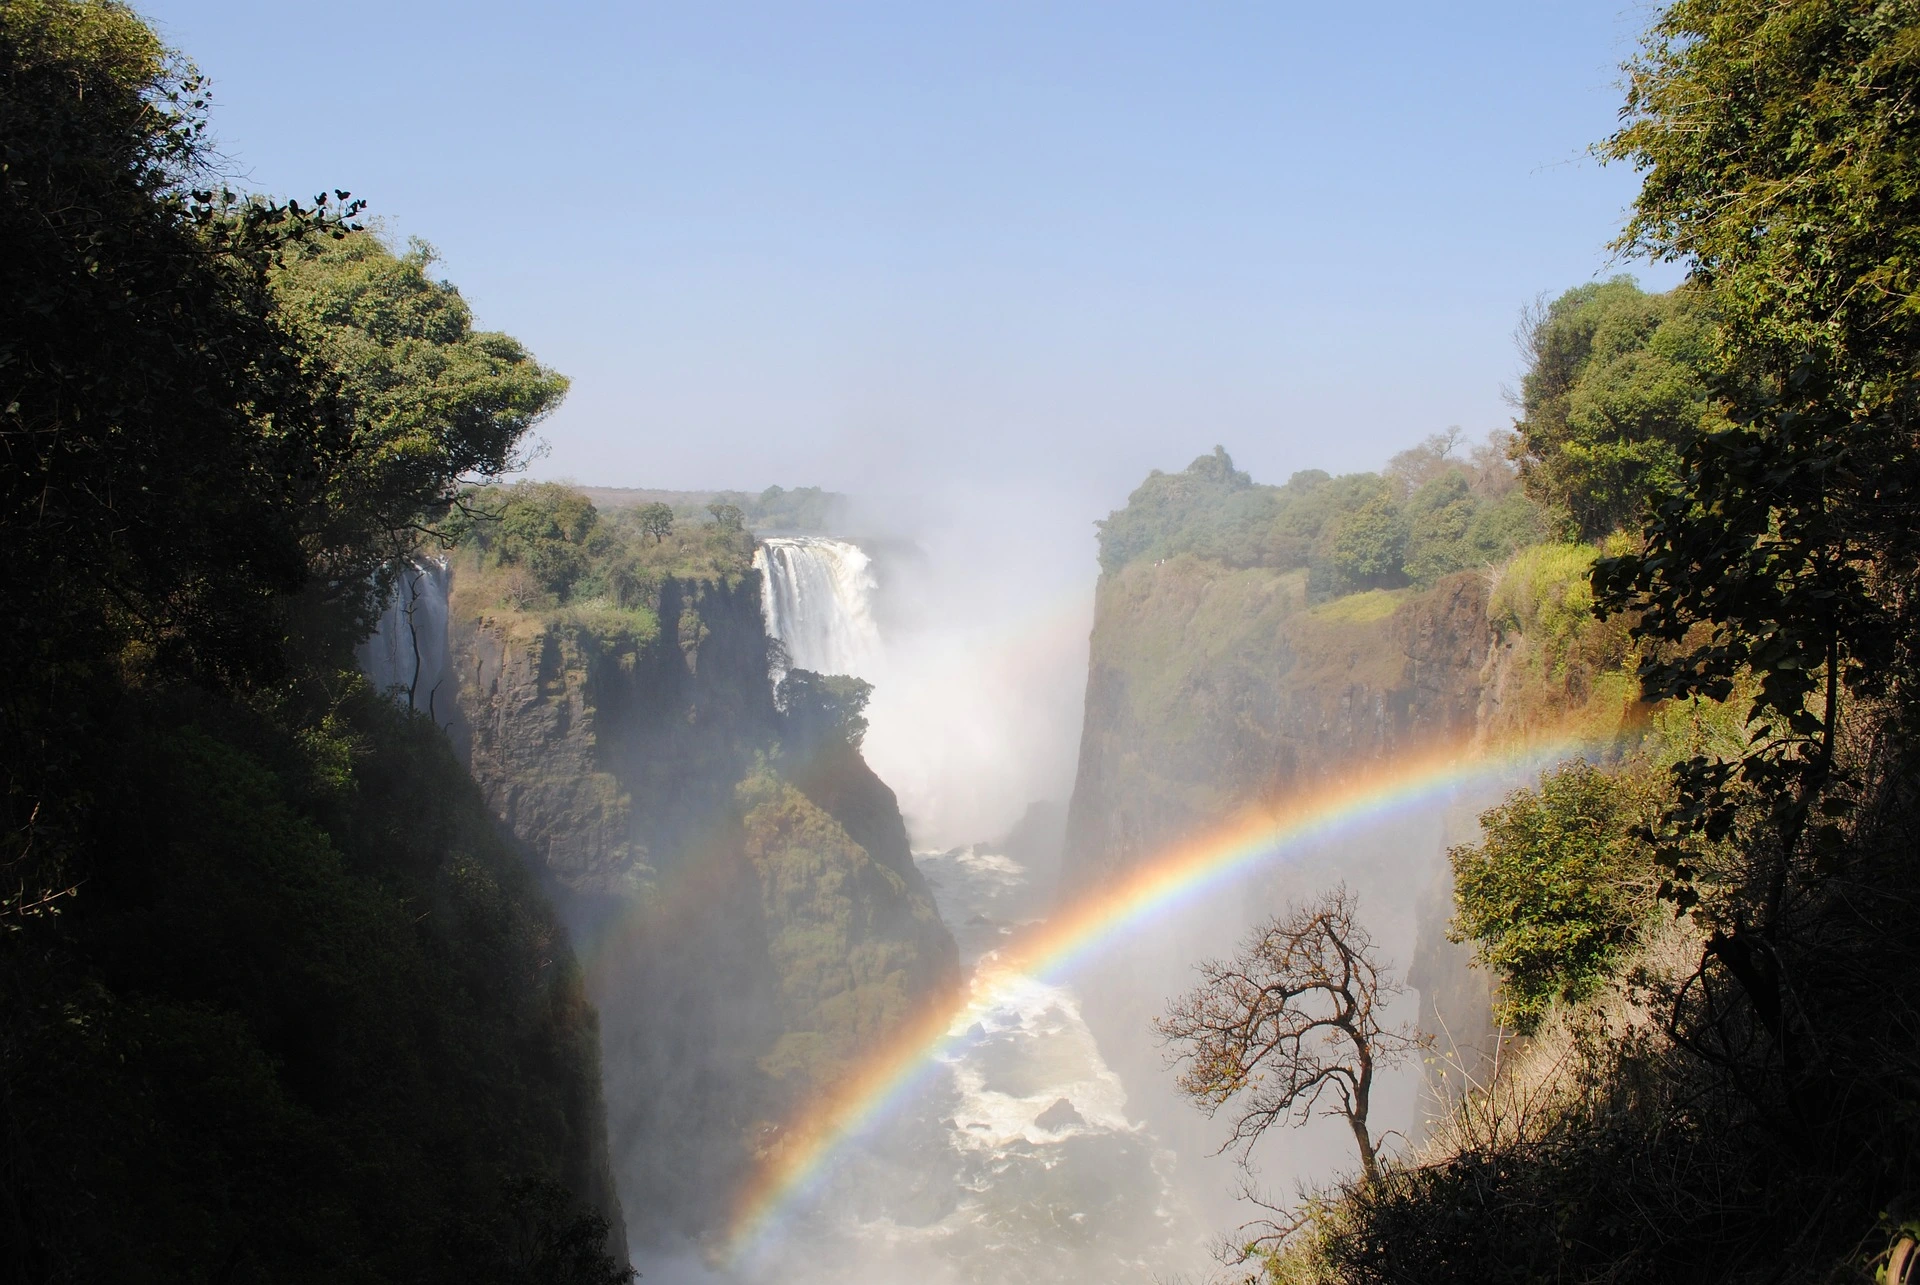 The mighty Victoria Falls in Zambia